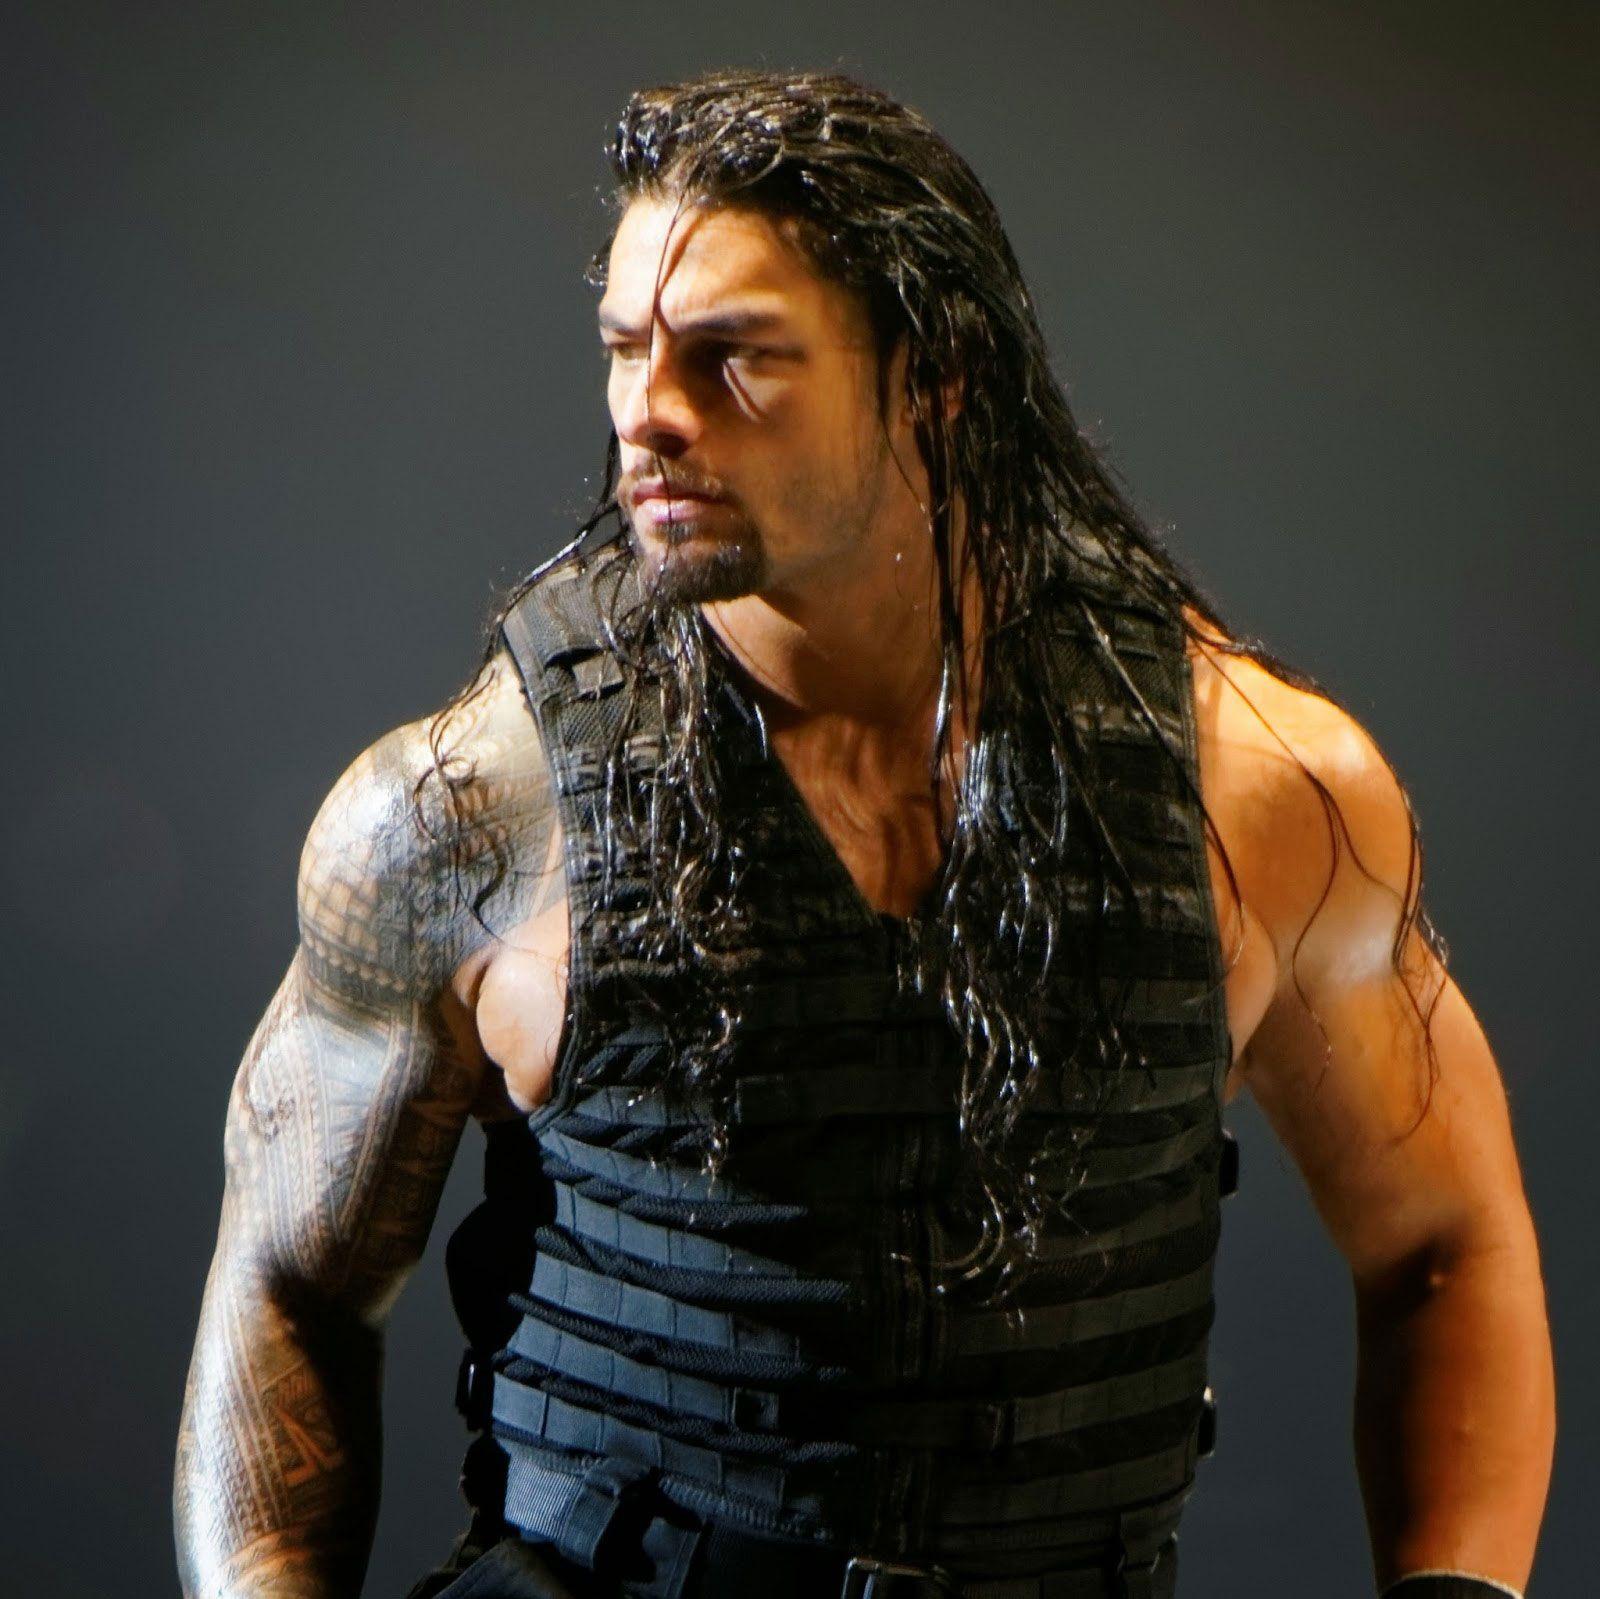 Download Roman Reigns WWE Wrestler 2014 Picture, Desktop & Mobile